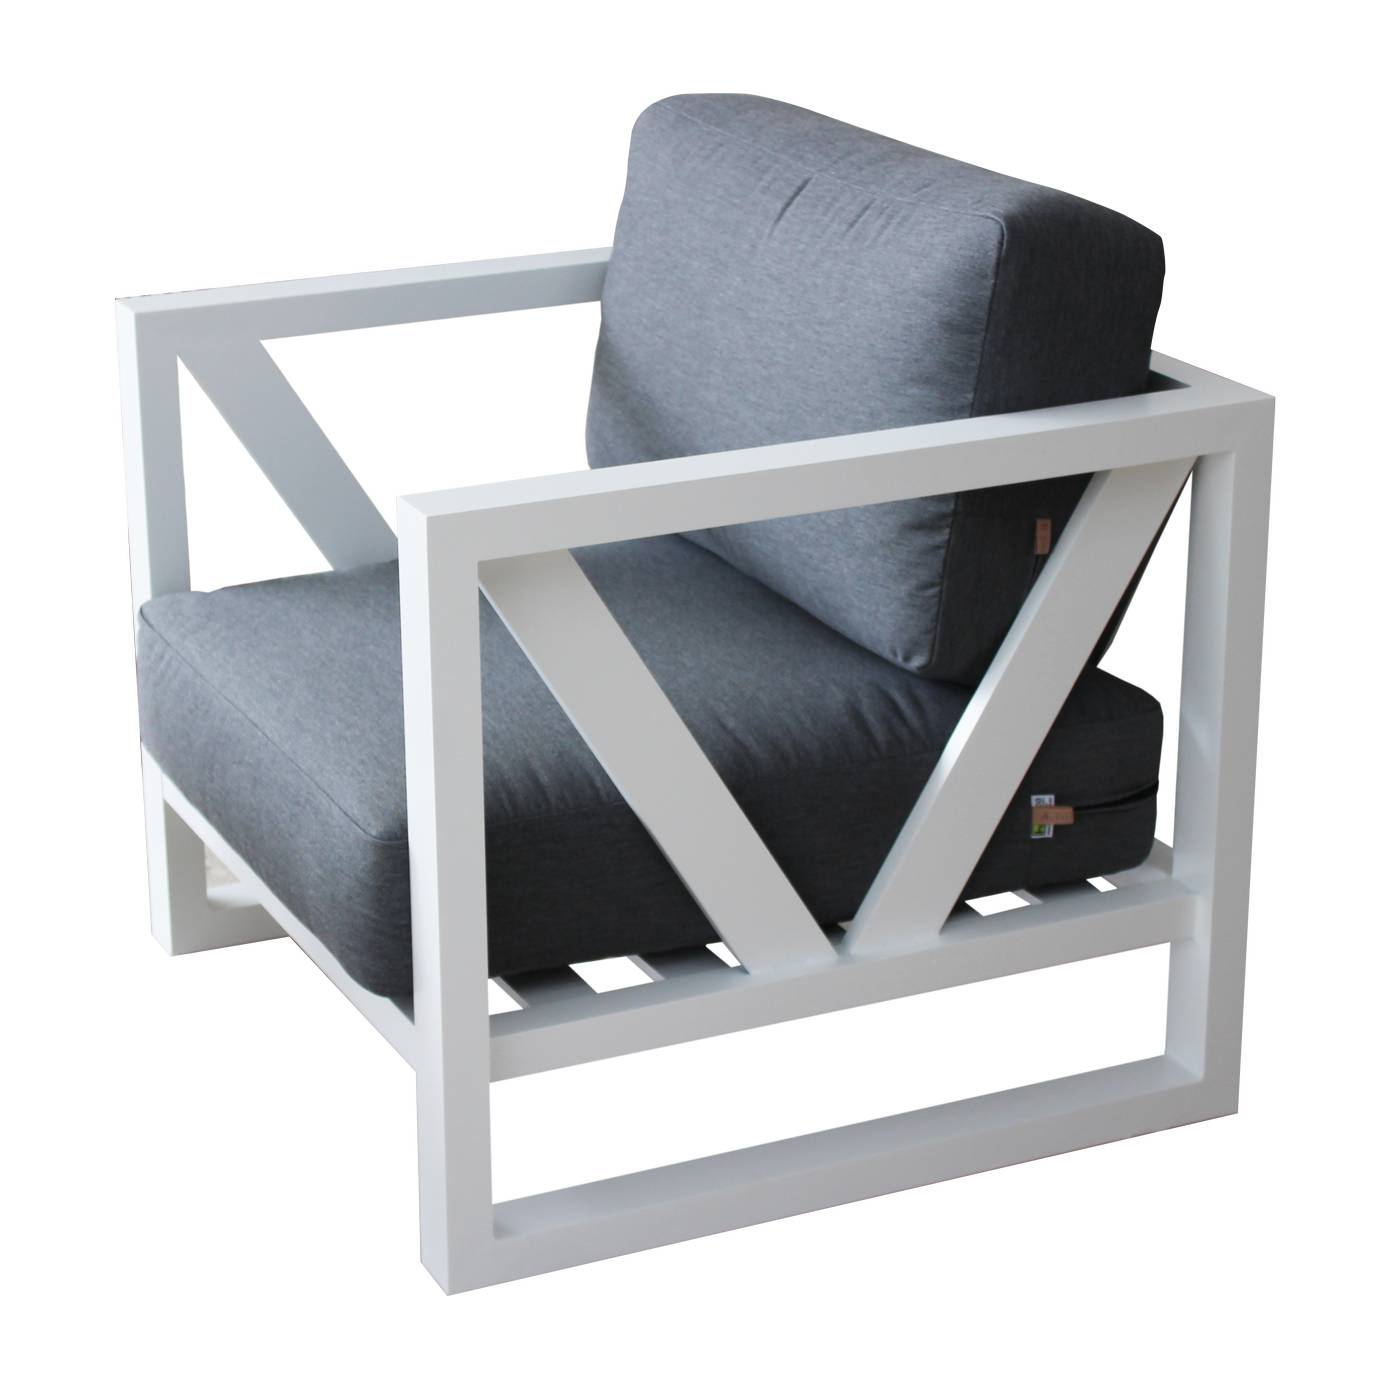 Set Aluminio Luxe Ventus-7 - Lujoso conjunto de aluminio: sofá 2 plazas + 2 sillones + mesa de centro. Color conjunto: blanco, antracita, champagne, plata o marrón.